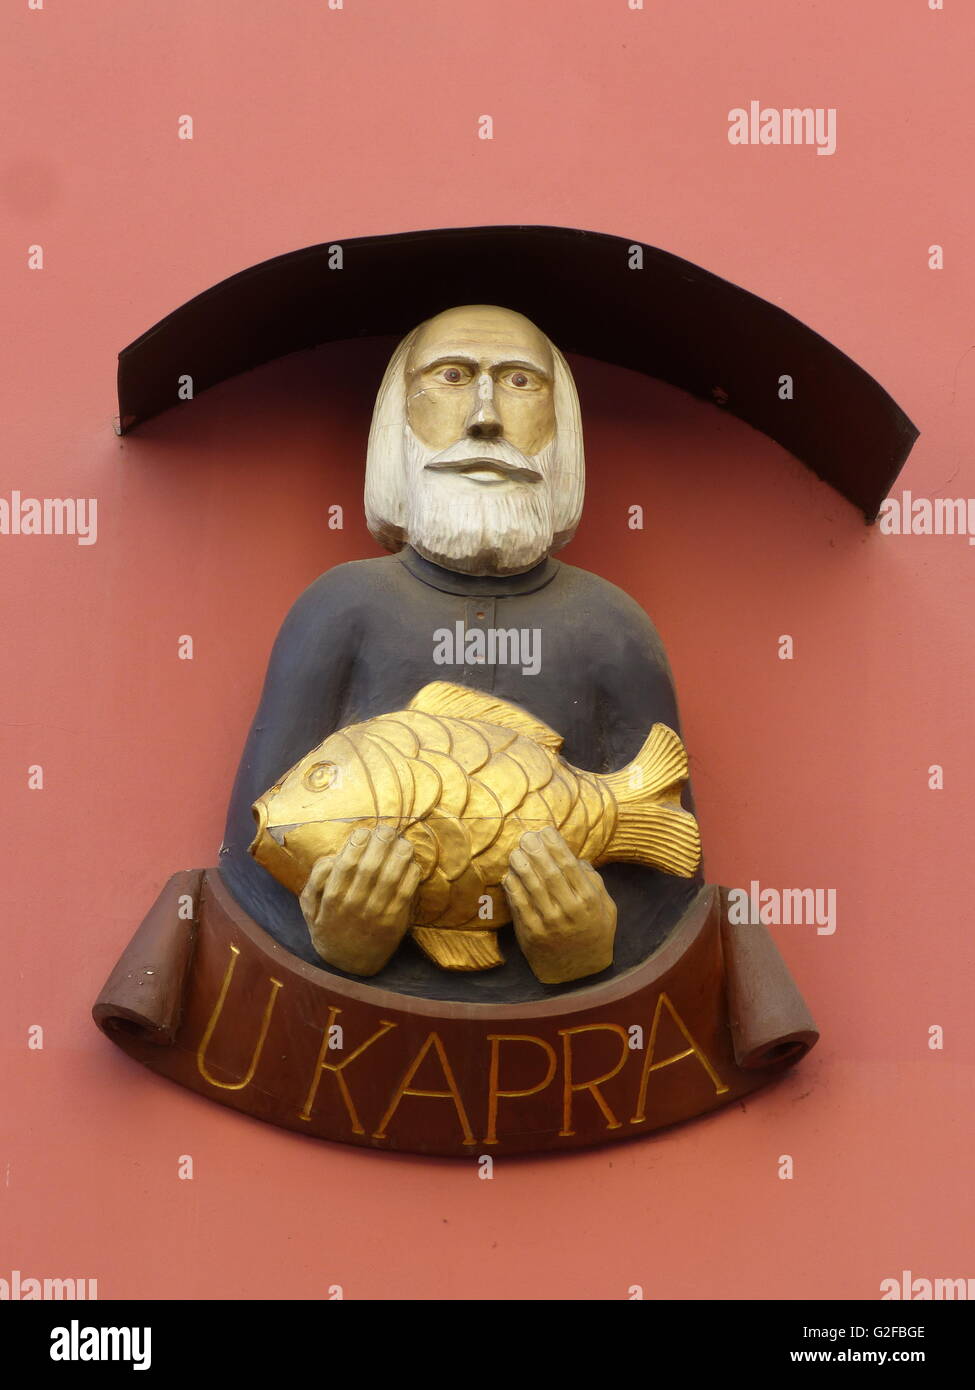 House sign 'U Kapra', Prague Stock Photo